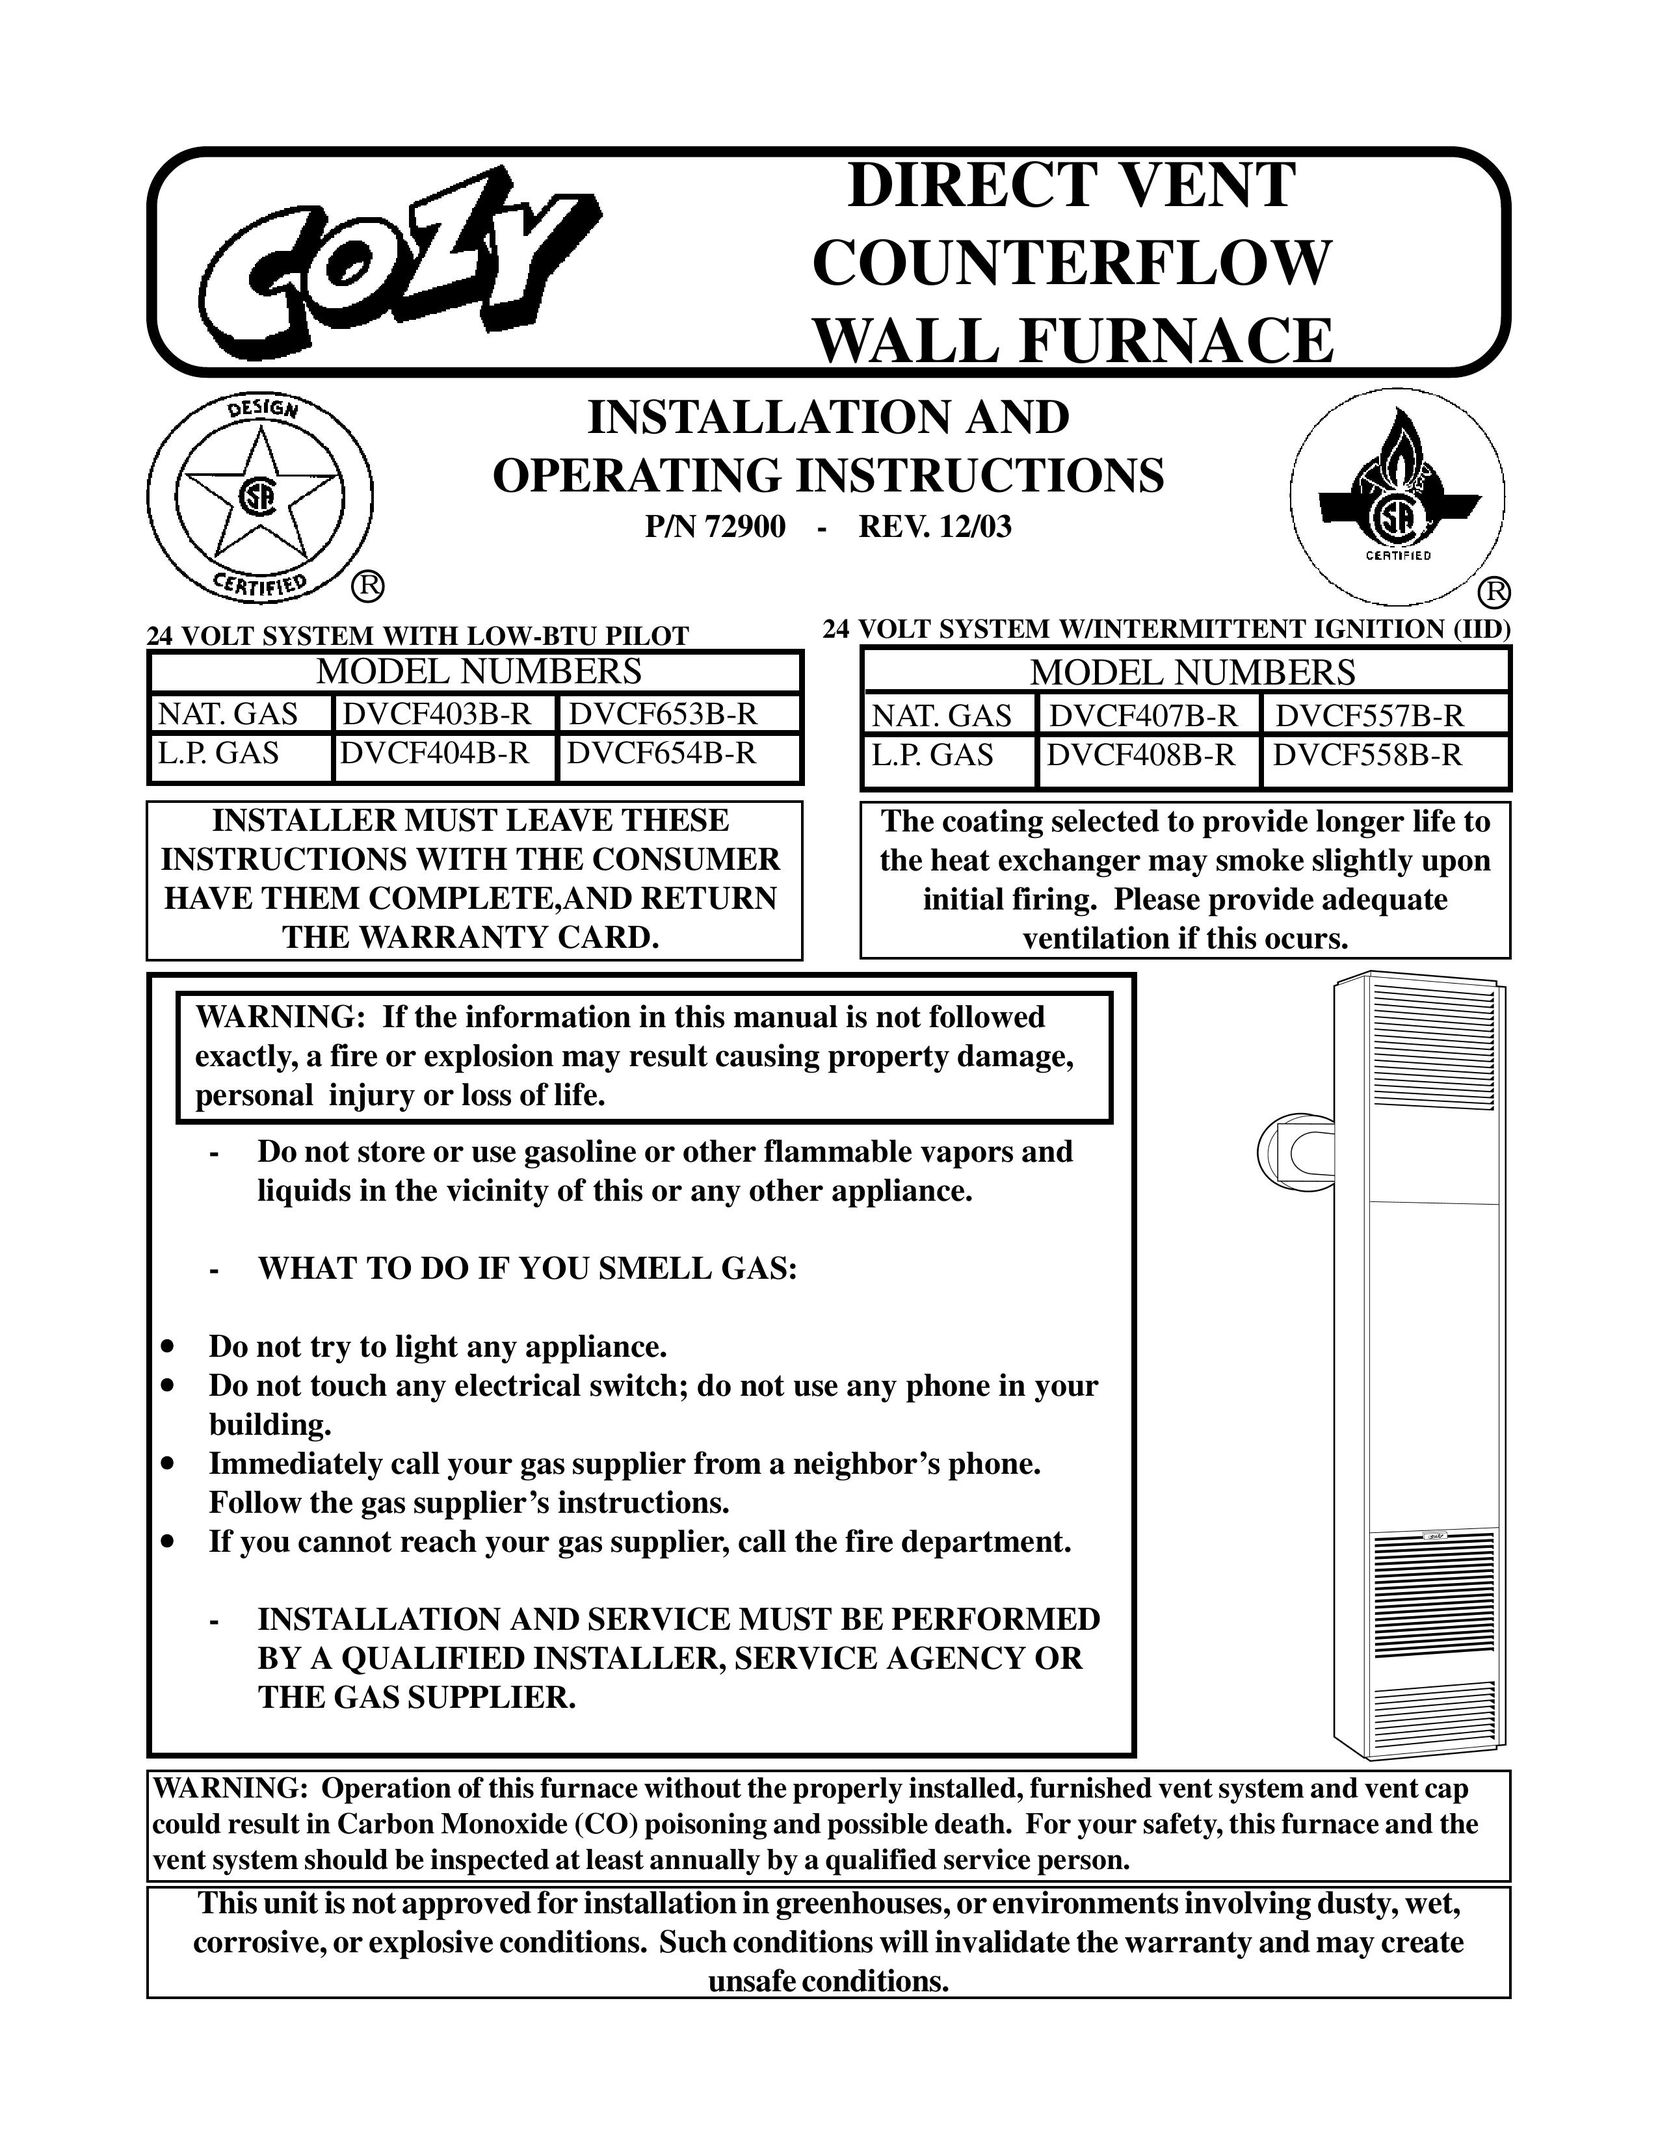 Louisville Tin and Stove DVCF404B-R Furnace User Manual